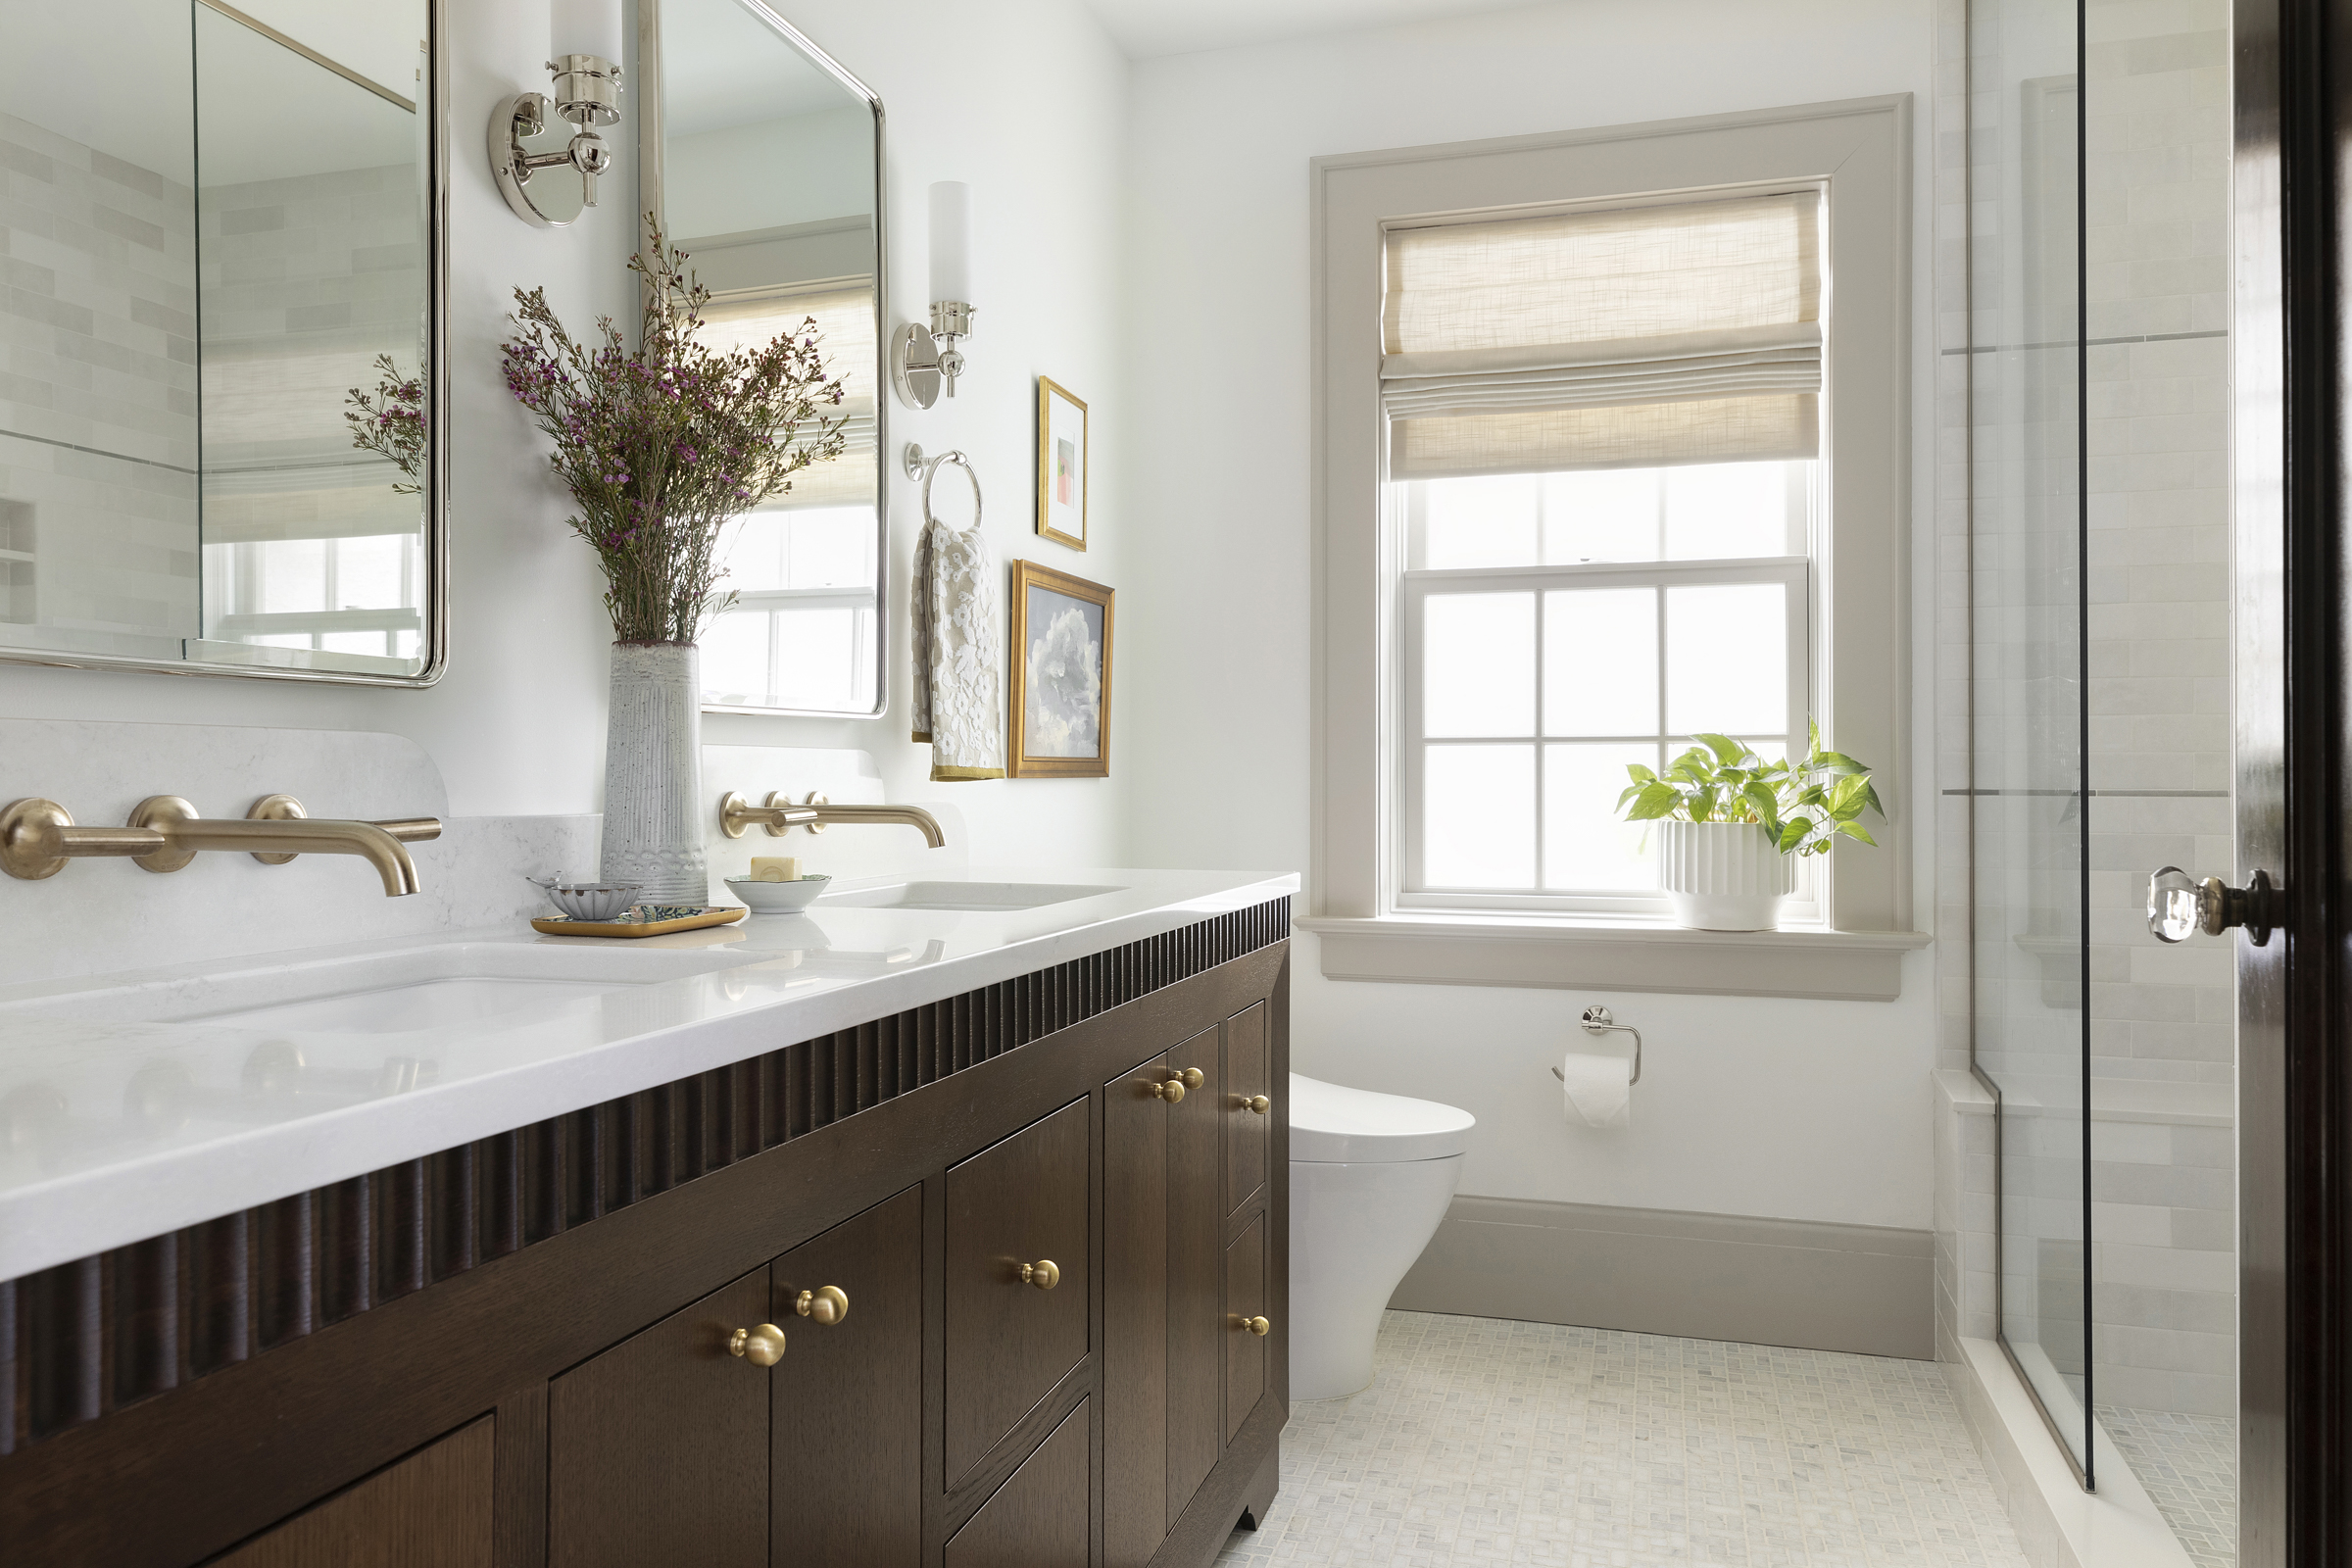 Twin Cities bathroom renovation with dark oak custom beveled vanity and mixed metals.